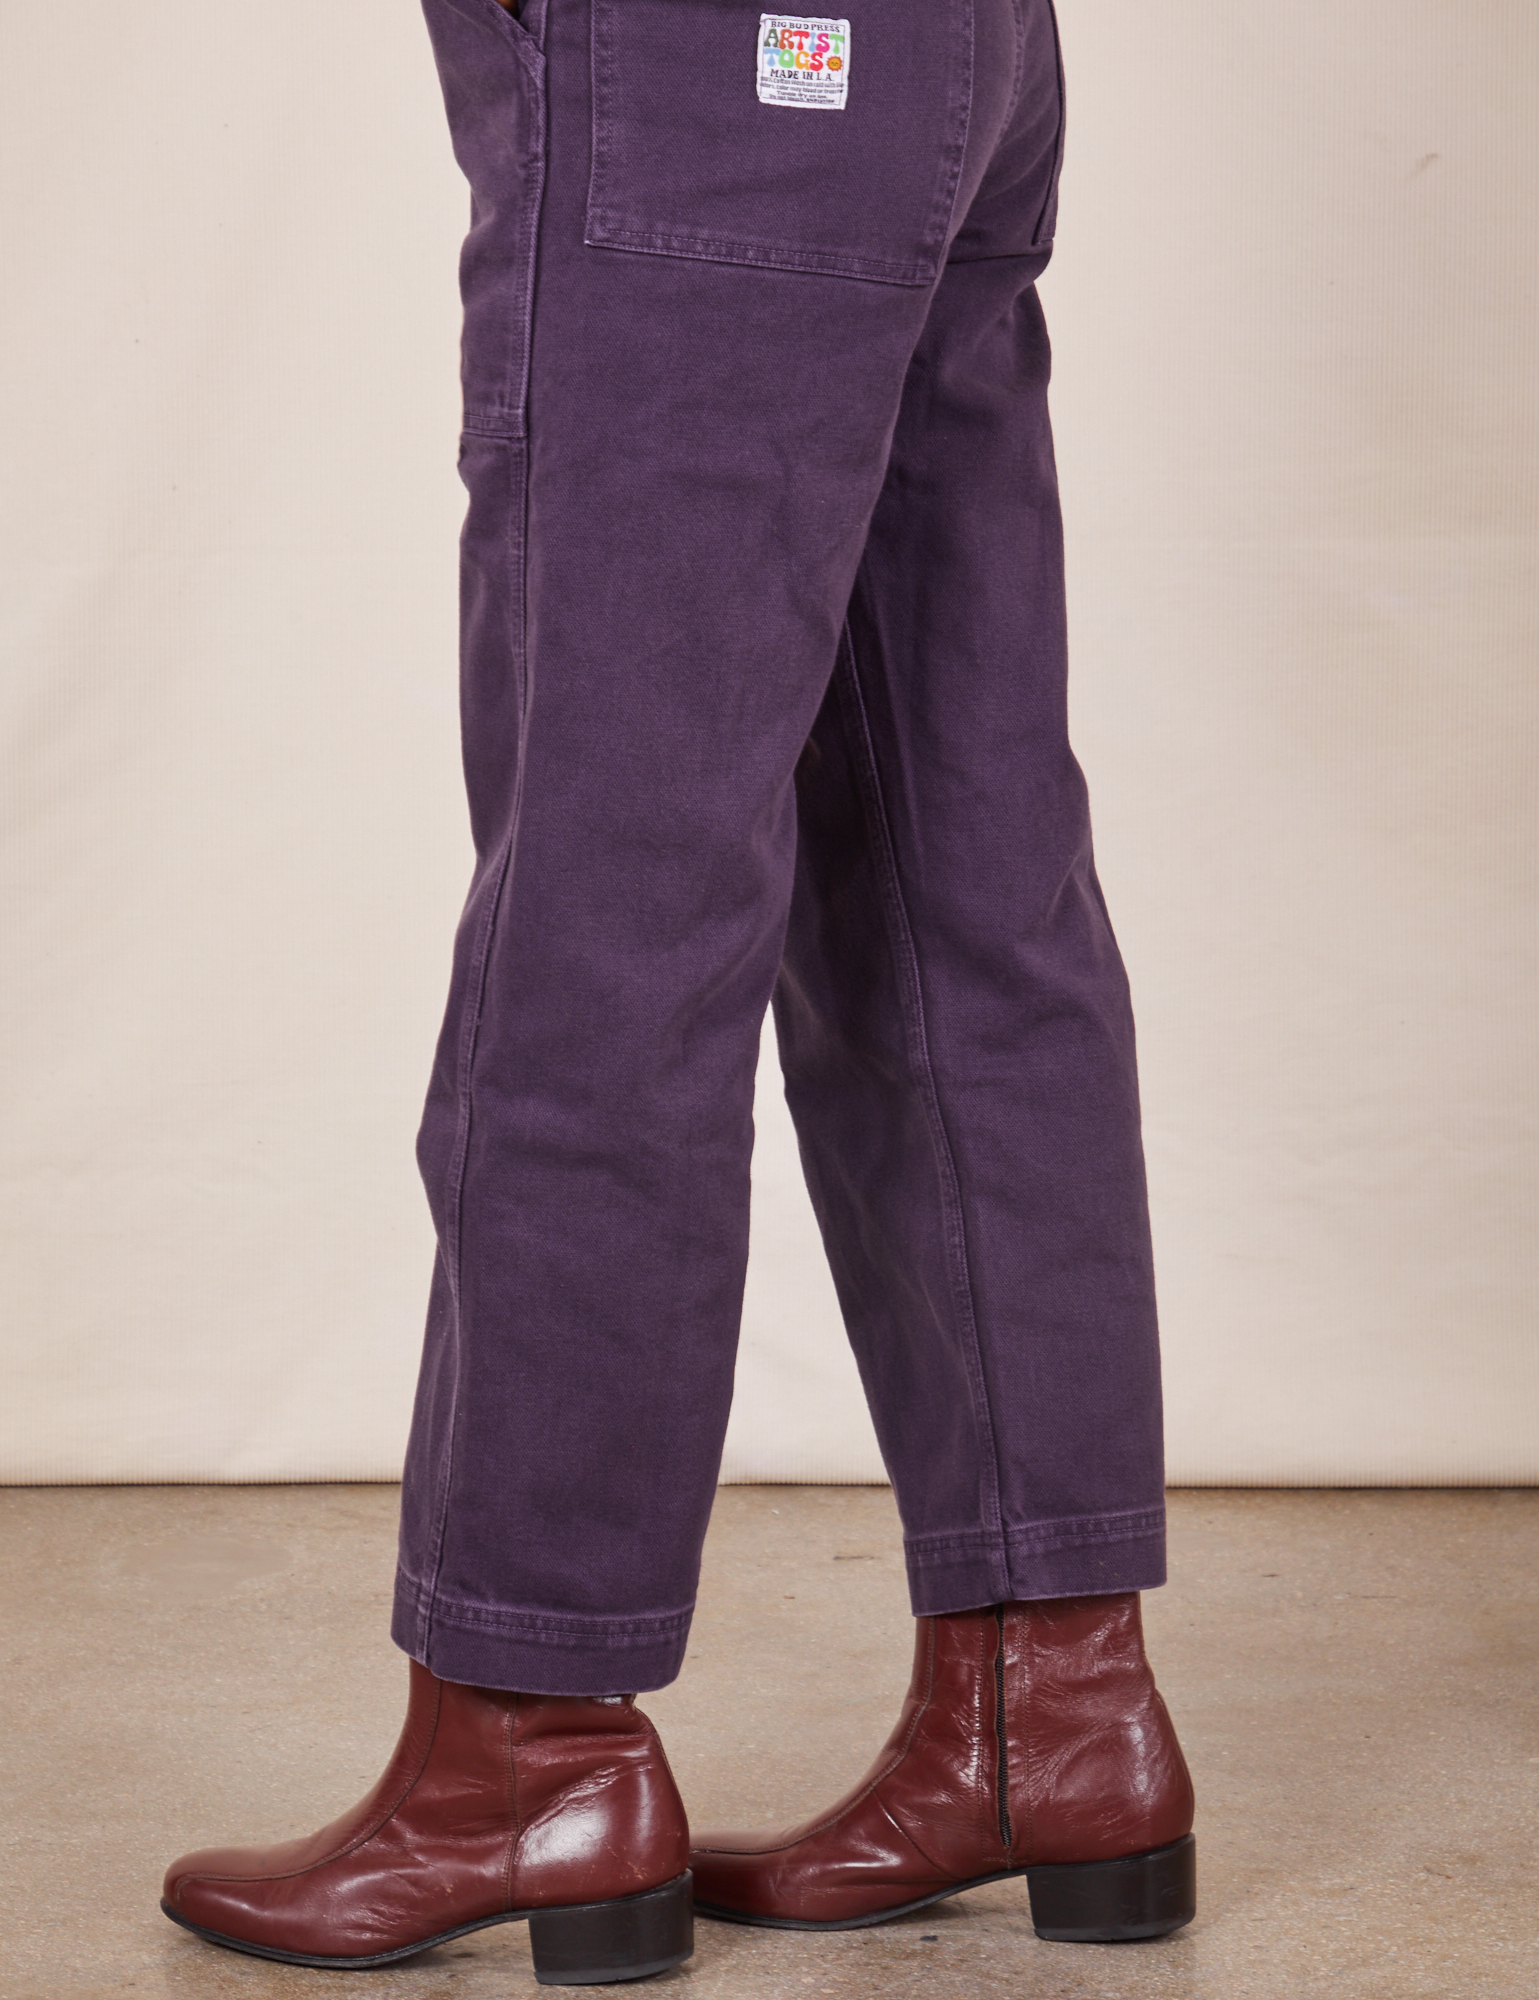 Side view pant leg close up of Original Overalls in Mono Nebula Purple worn by Jesse